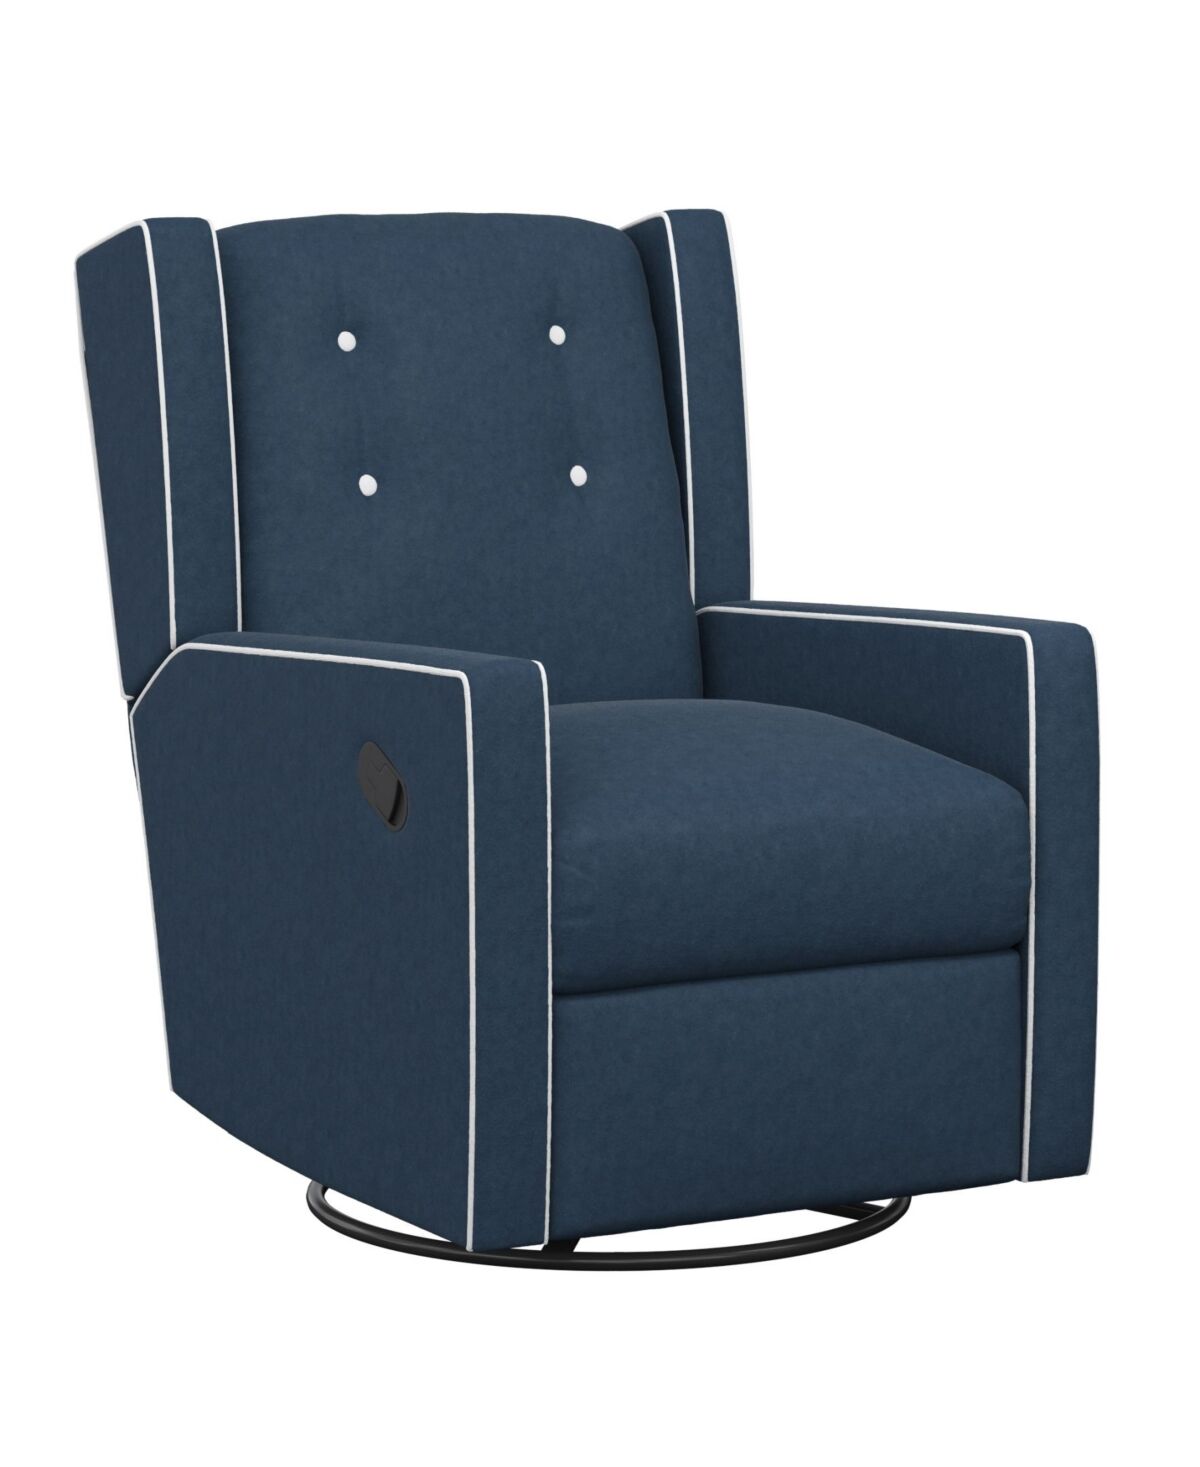 Baby Relax Mariella Swivel Glider Recliner Chair - Blue